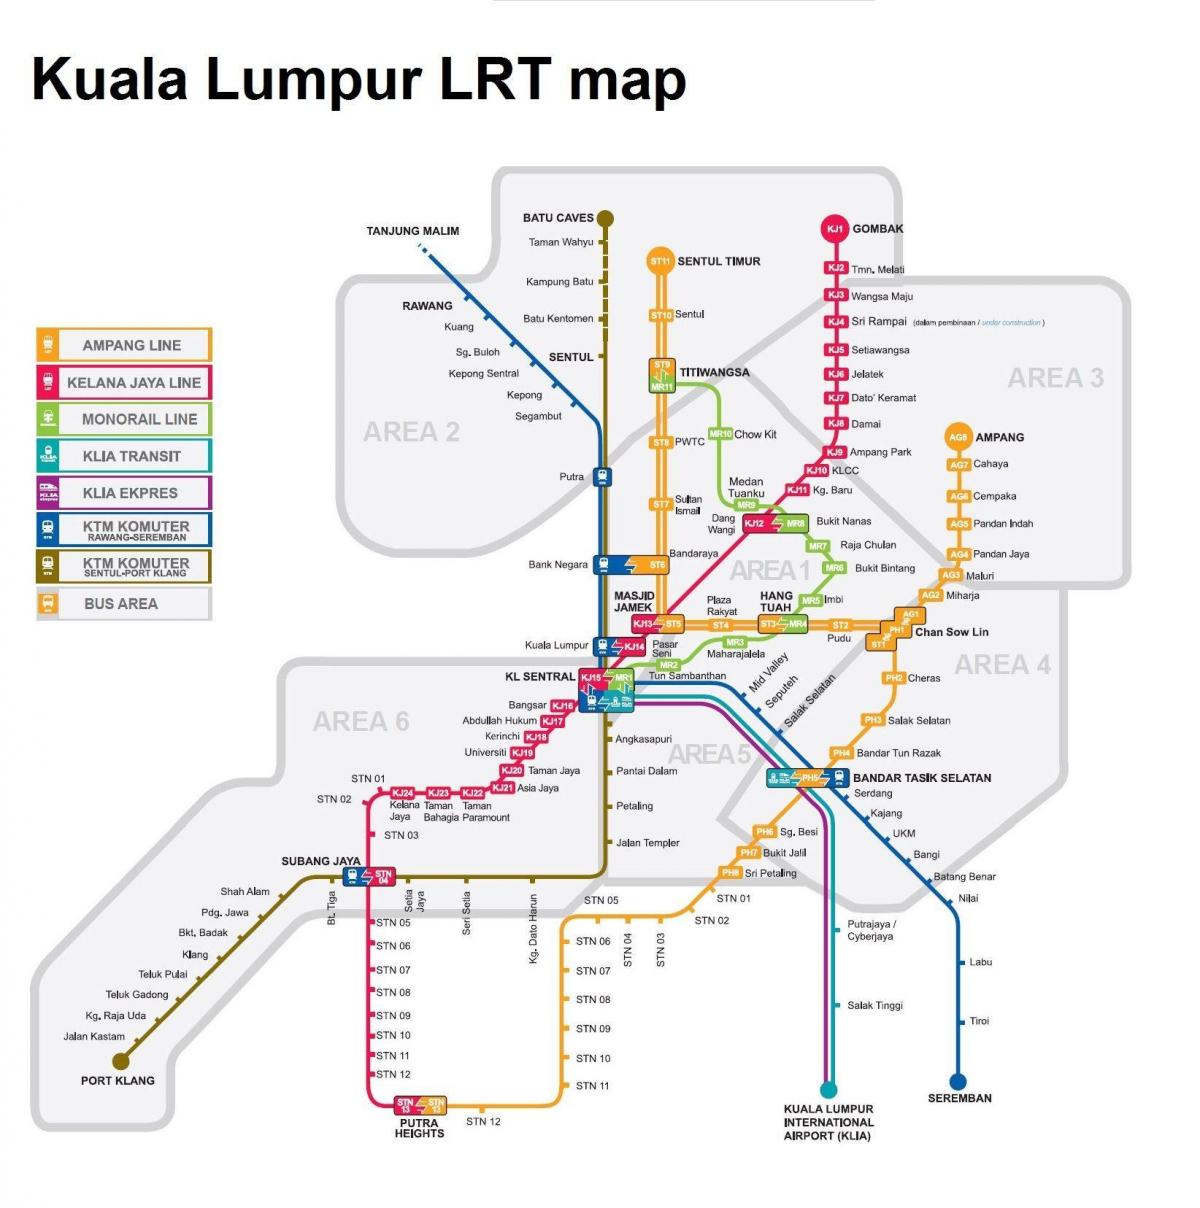 lrt نقشہ ملائیشیا 2016